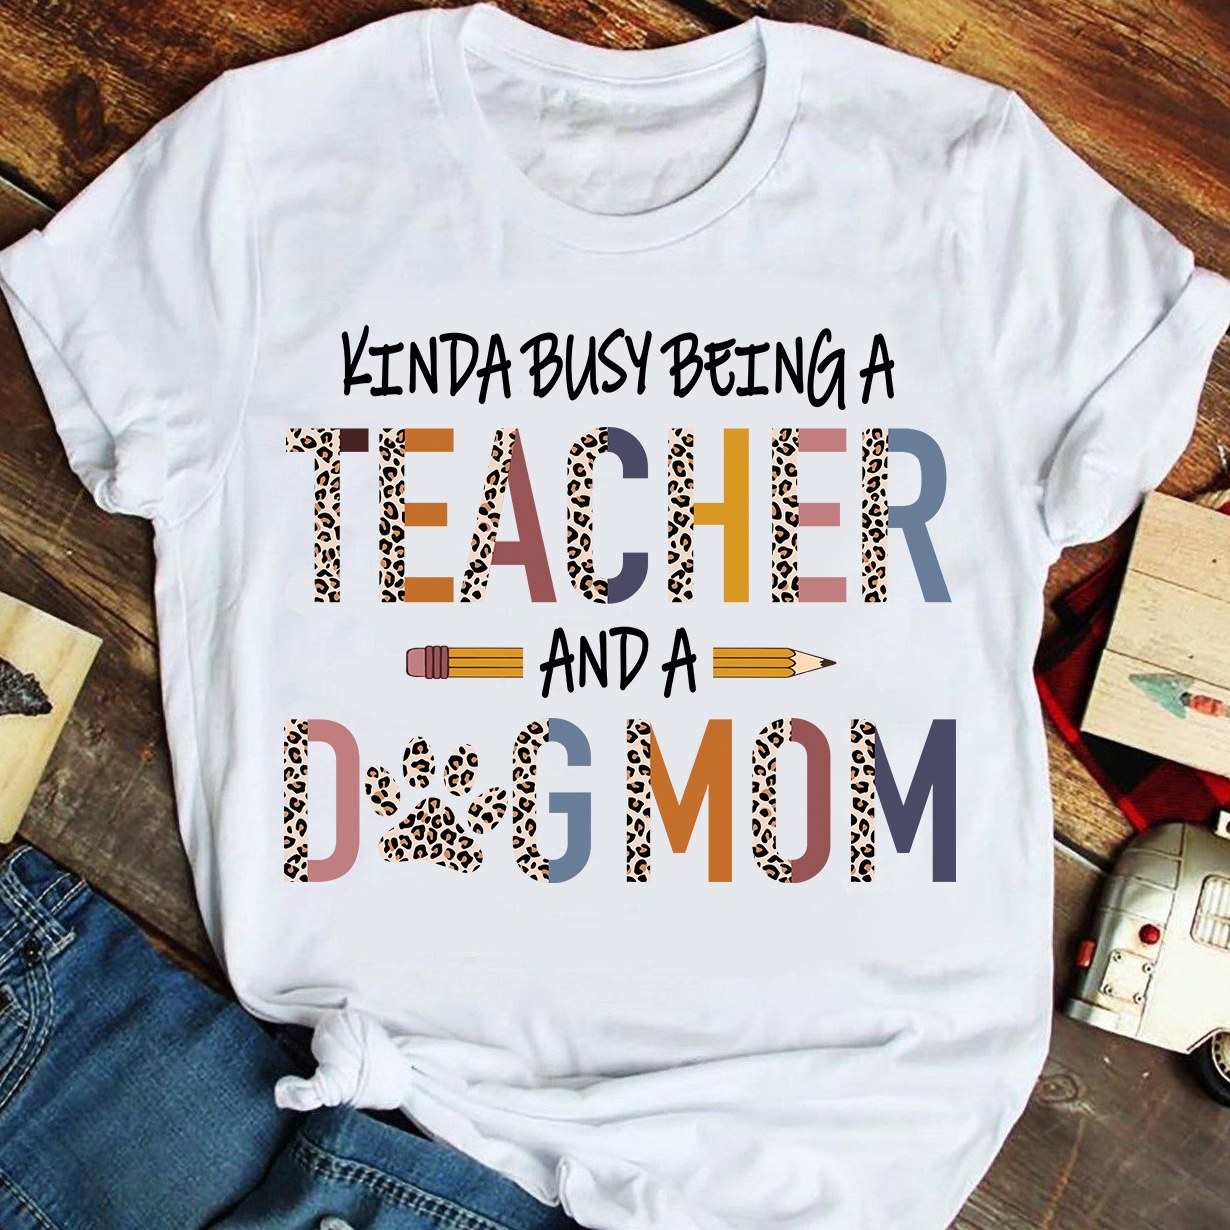 Kinda busy being a teacher and a dog mom